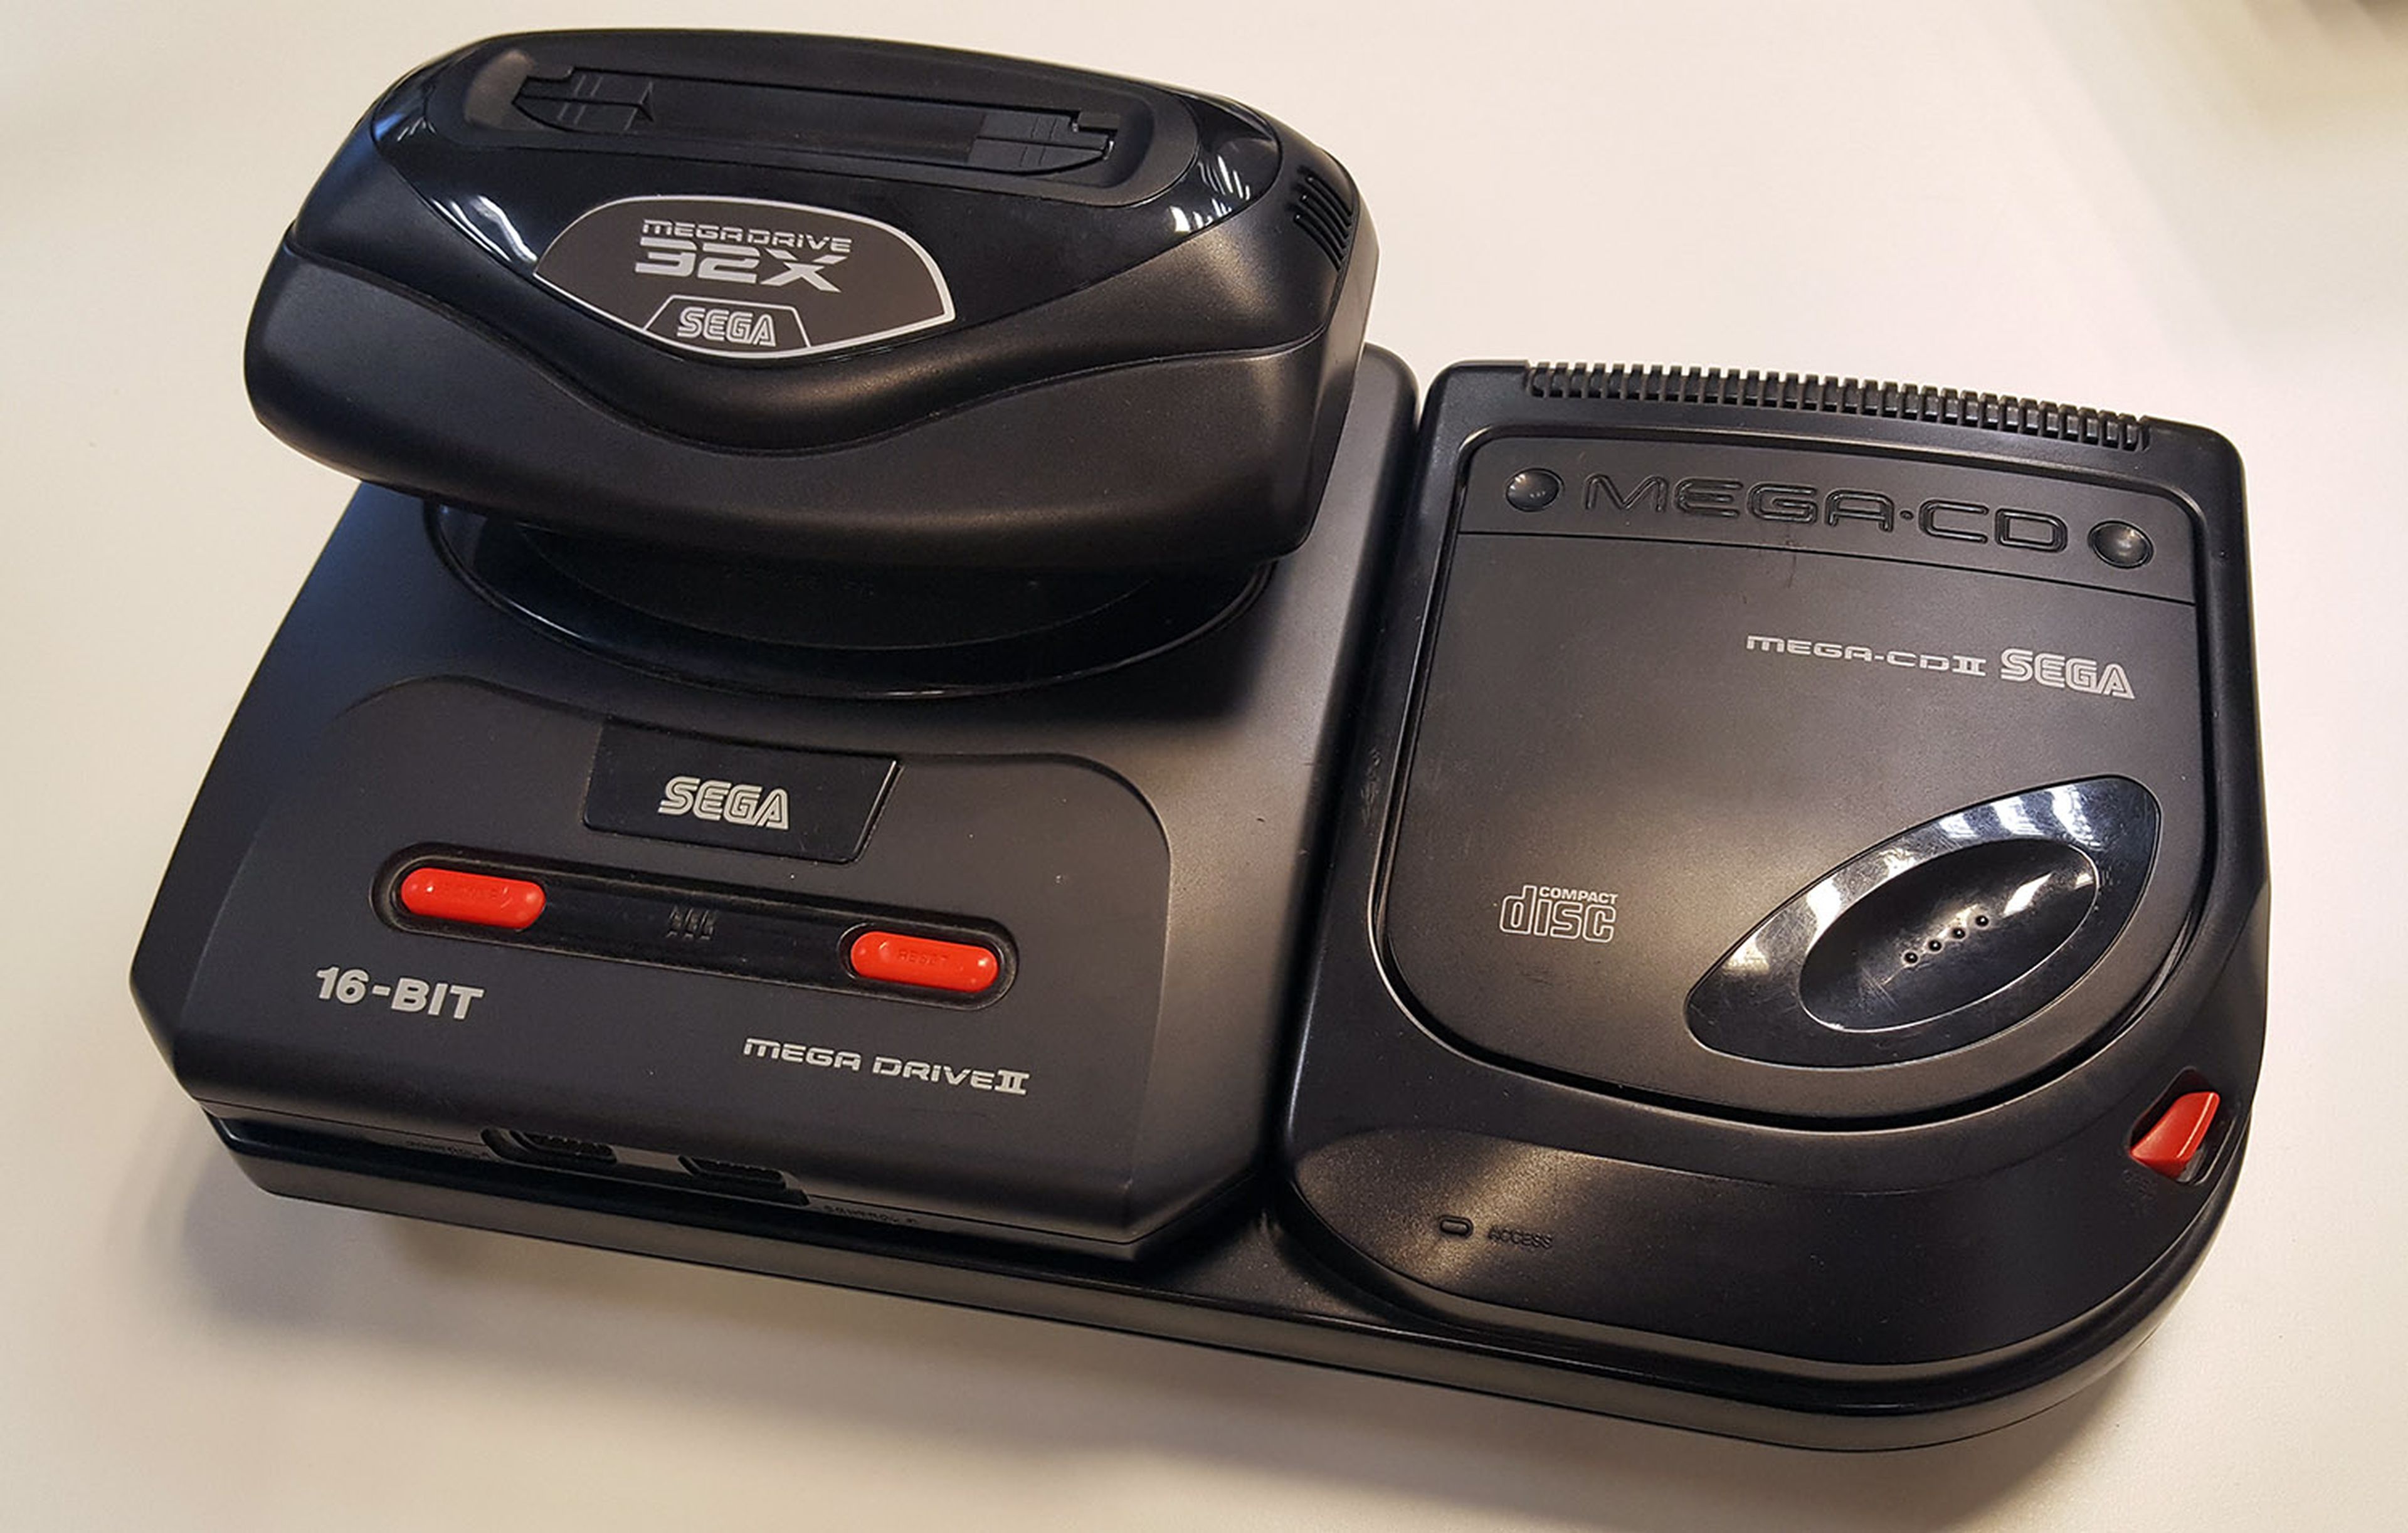 Mega Drive 32X